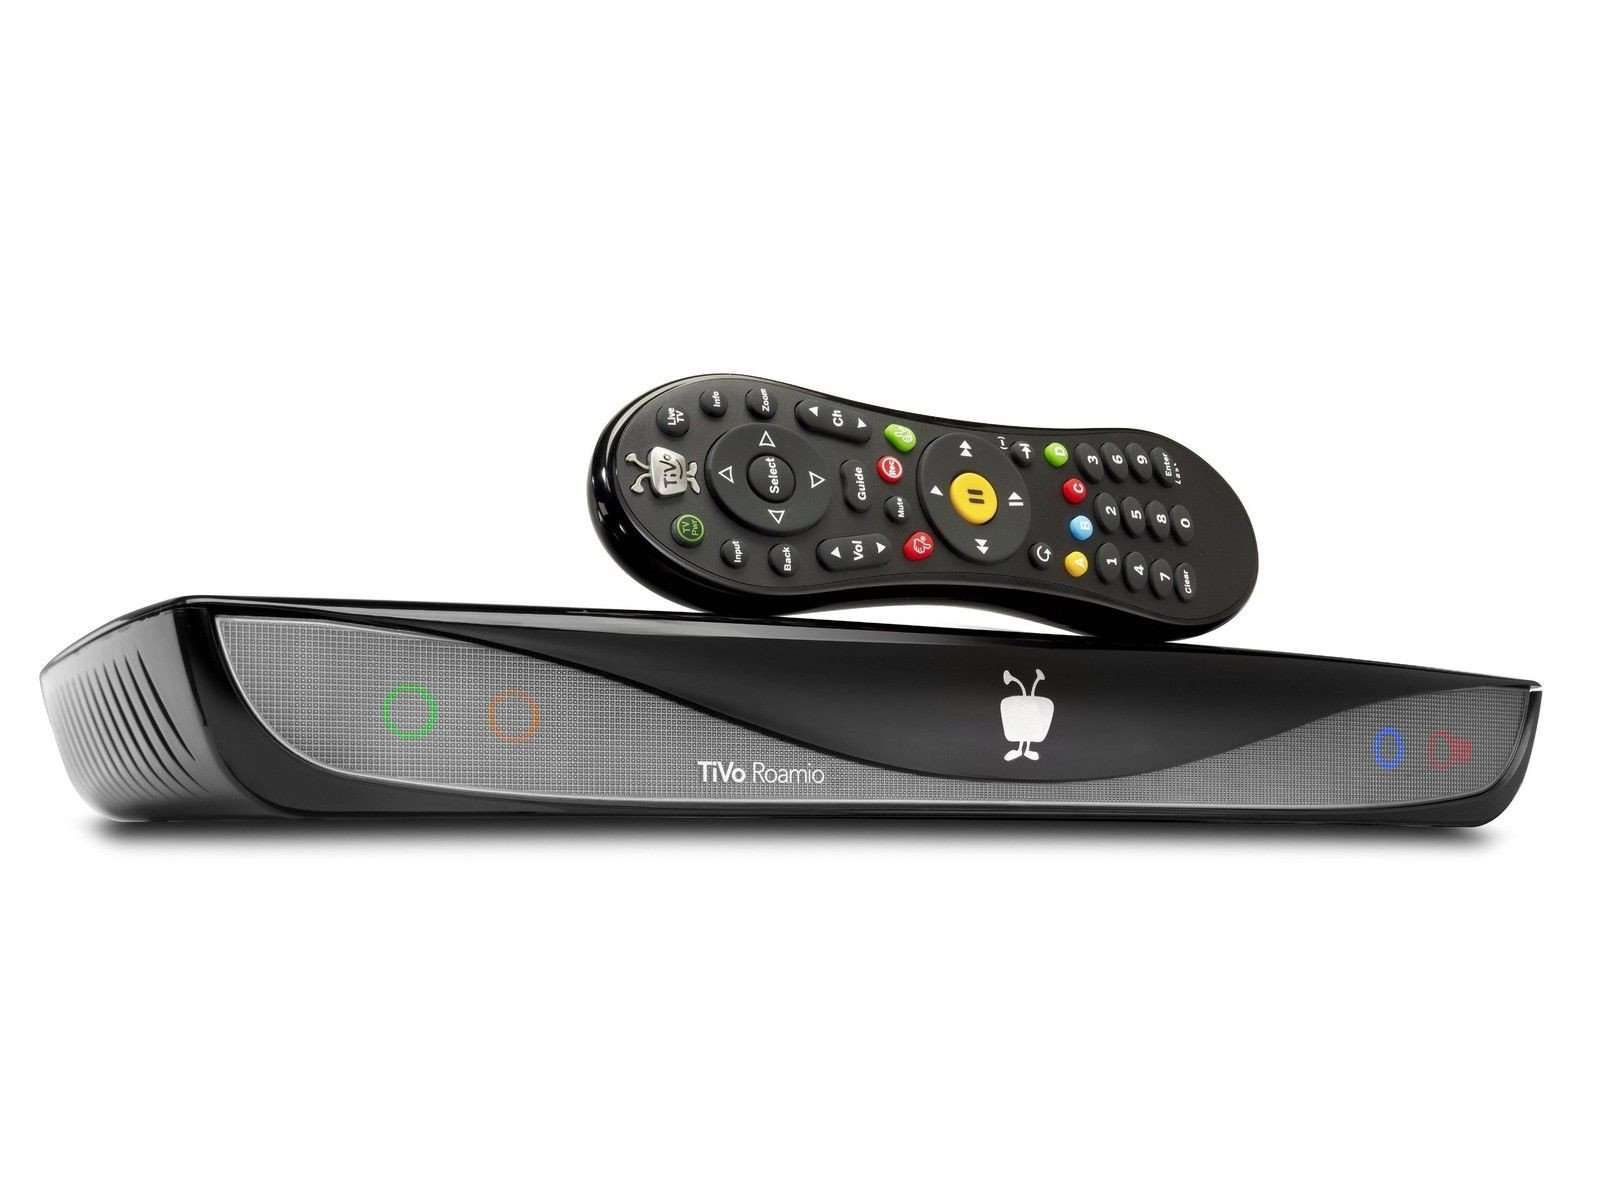 TiVo Roamio OTA 500gb (TCD846510) DVR & Media Player - With All-in, Lifetime Service